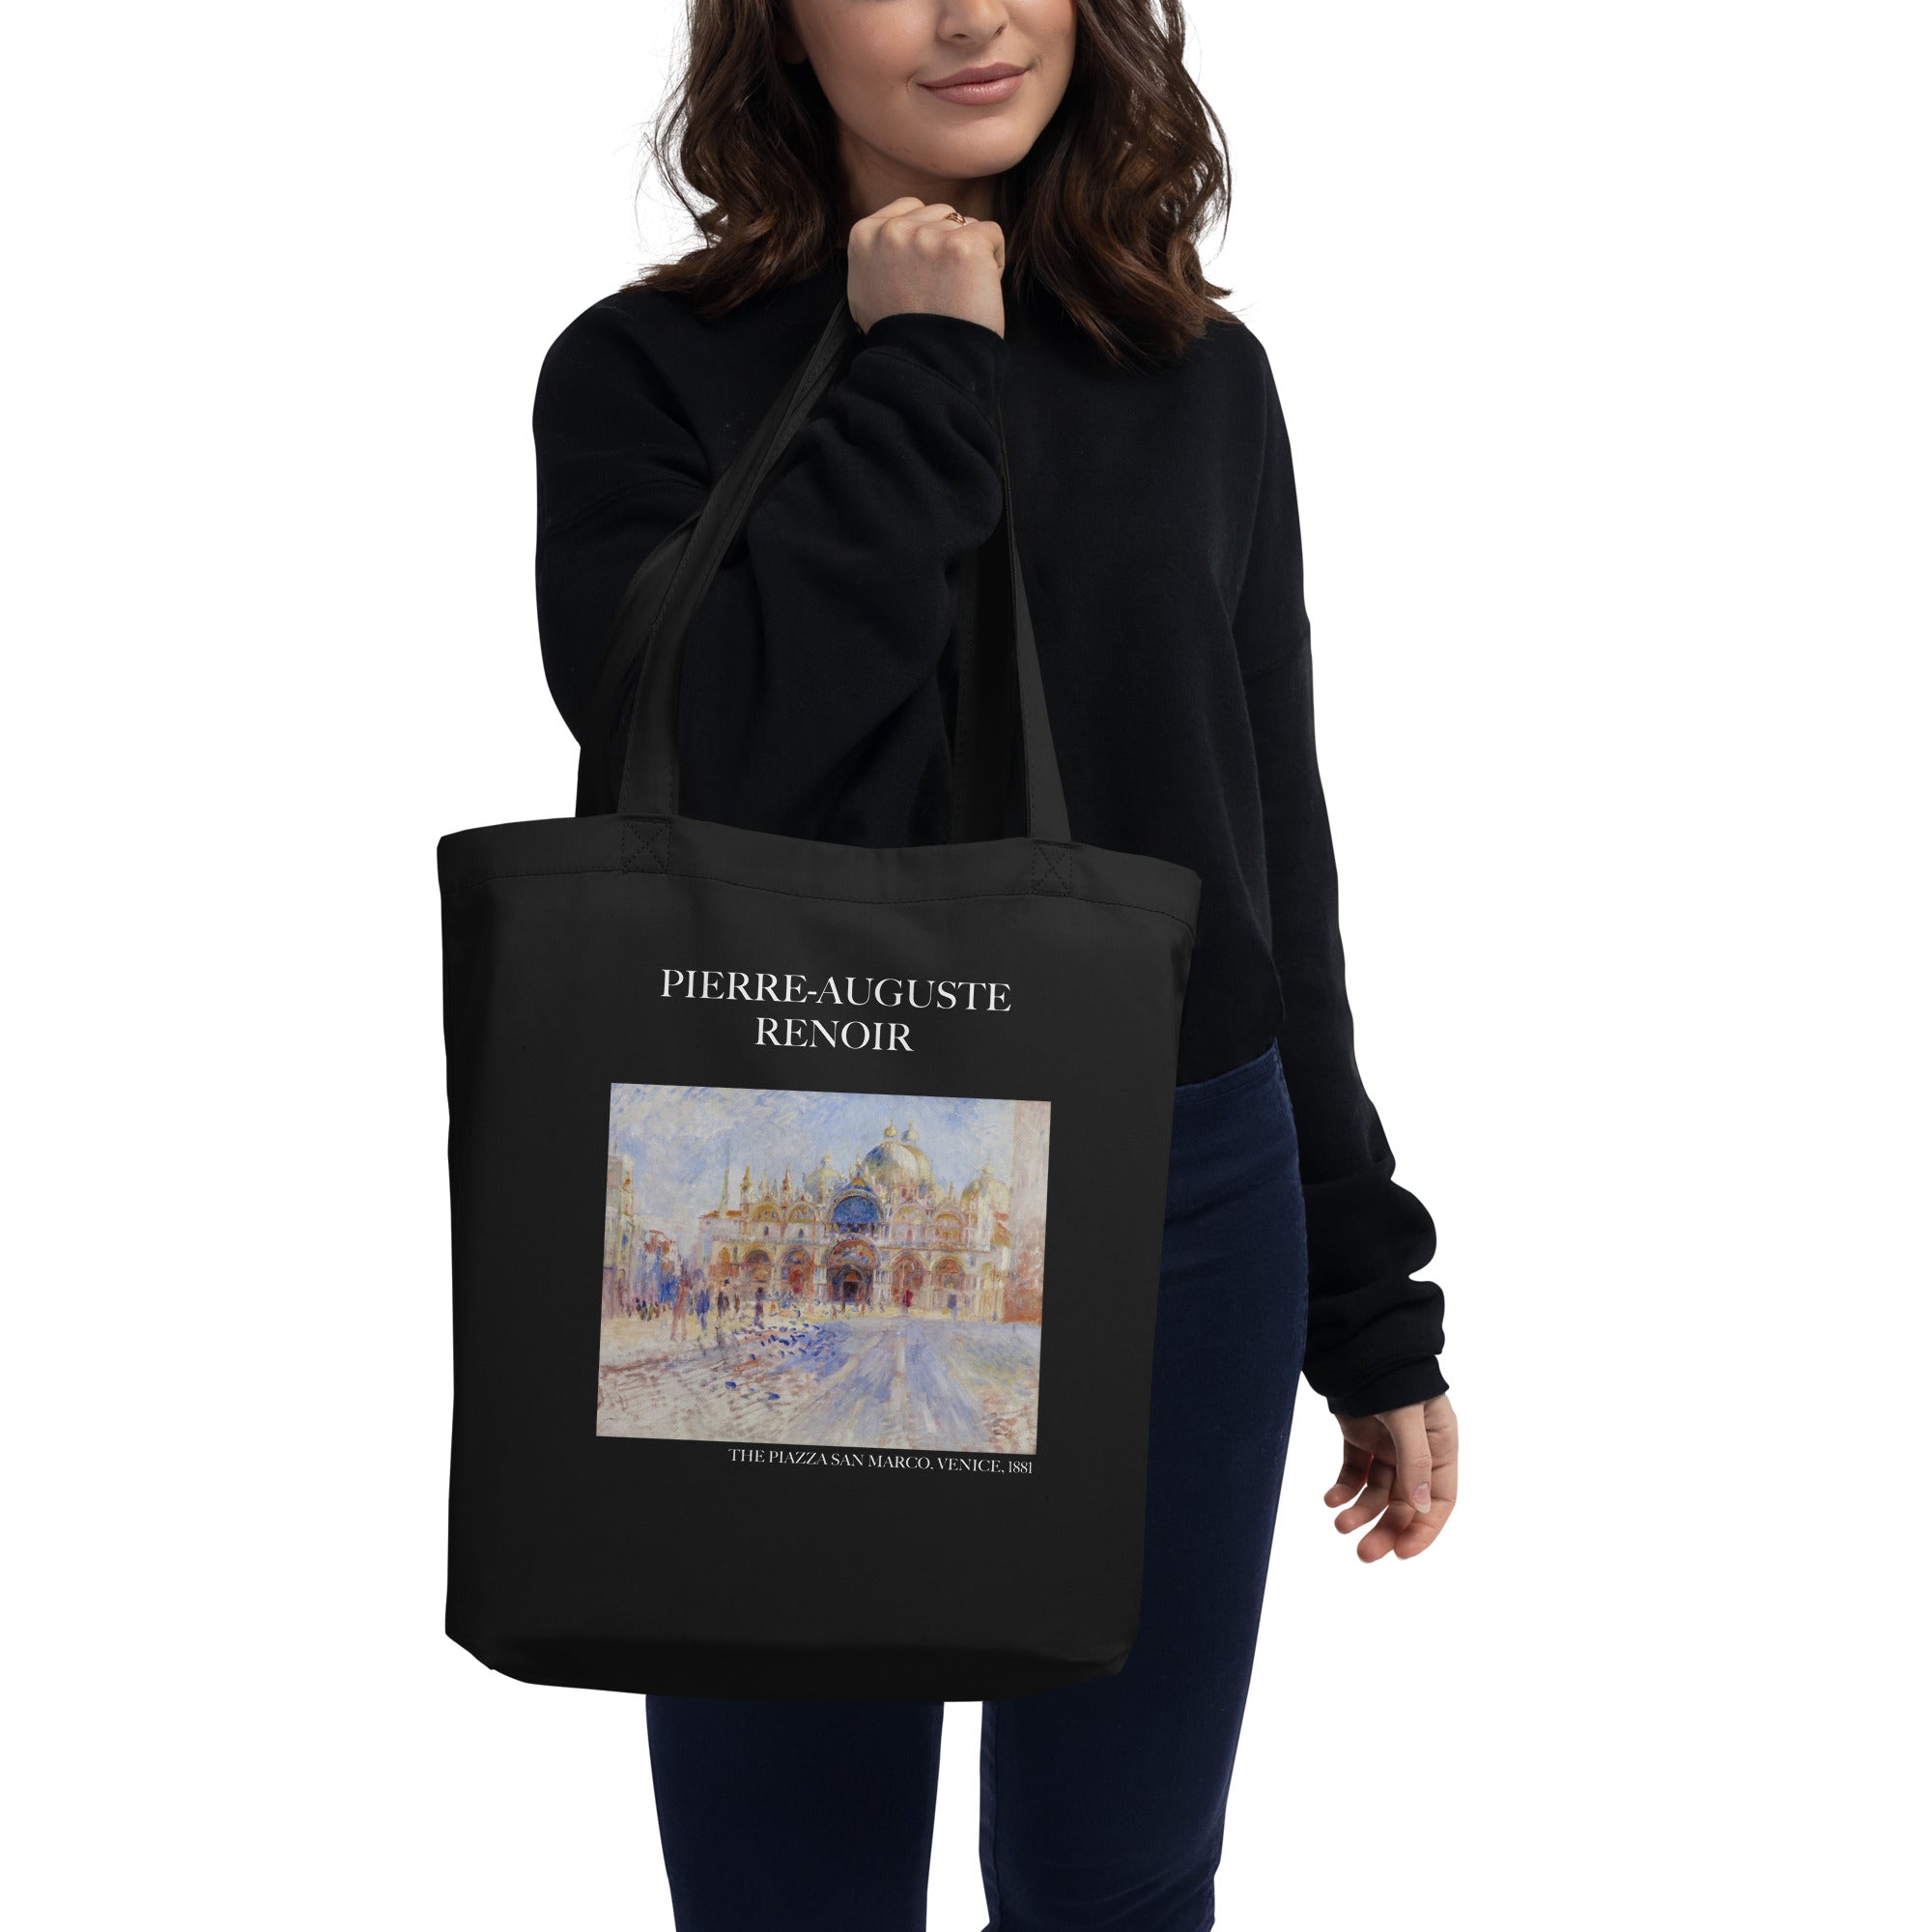 Pierre-Auguste Renoir 'The Piazza San Marco, Venice' Famous Painting Totebag | Eco Friendly Art Tote Bag